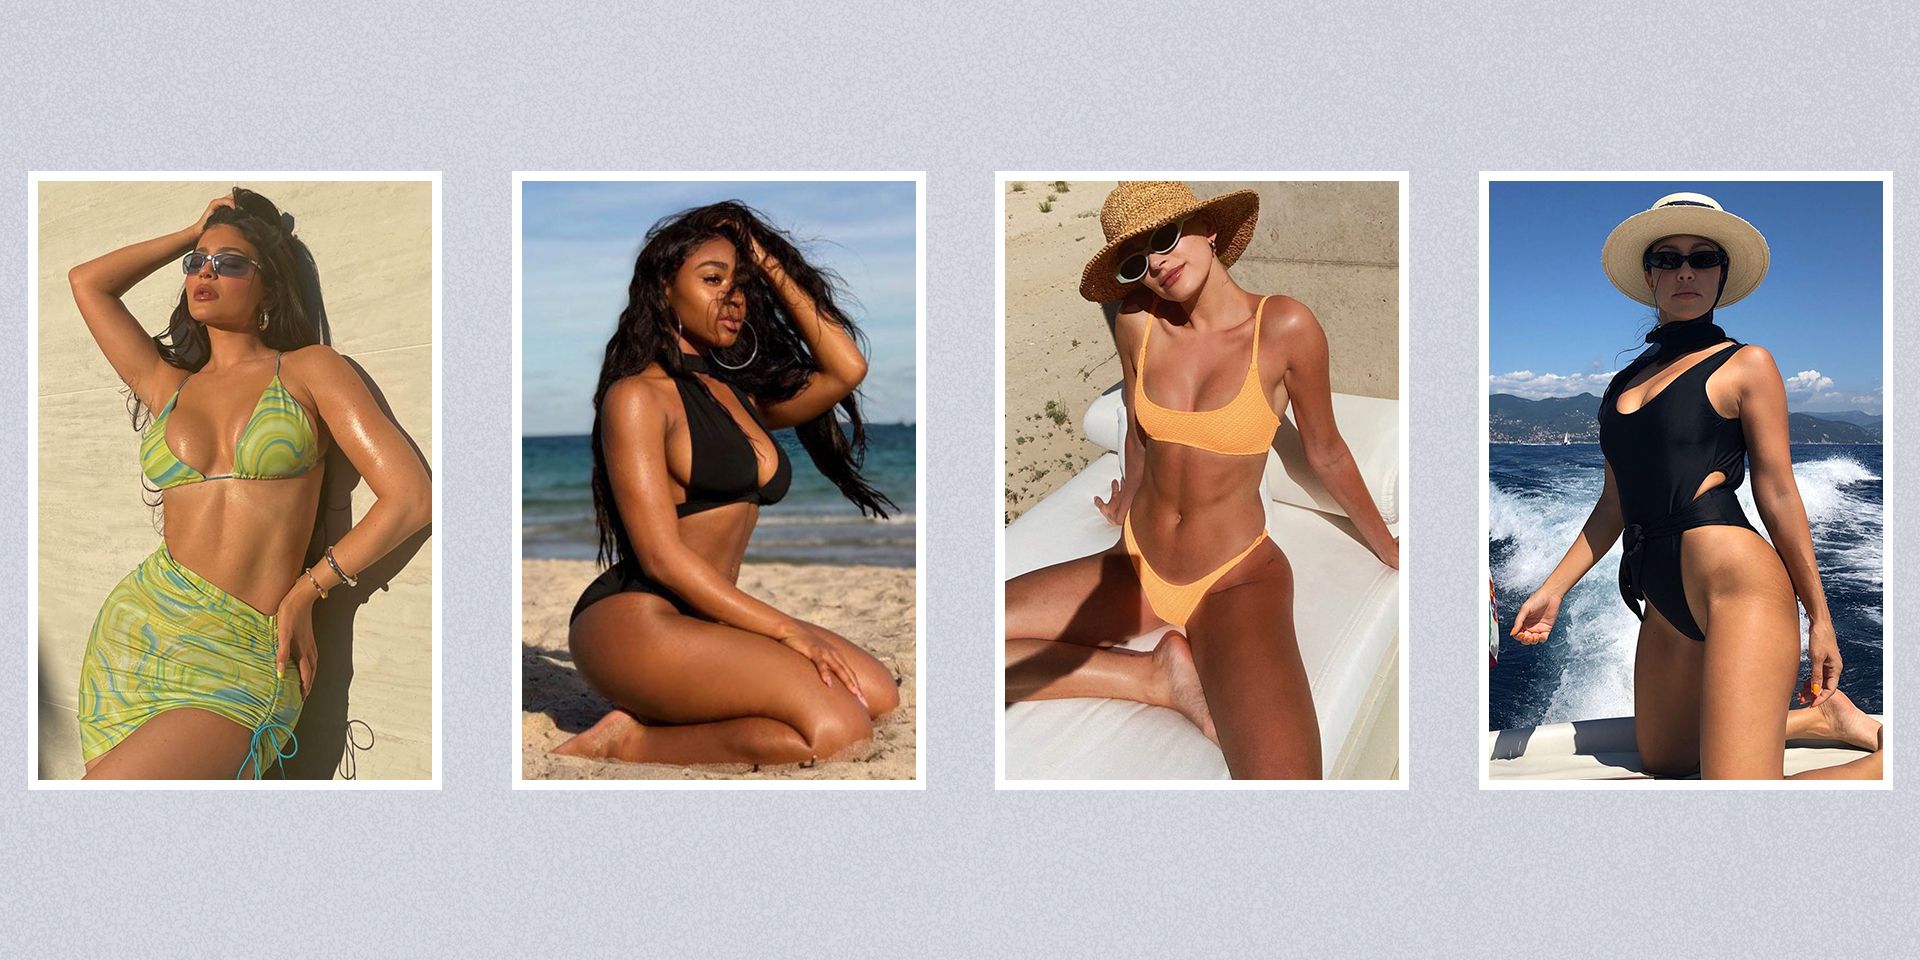 Beautiful celebrity bikini pics Pictures of Celebrities in Bikinis